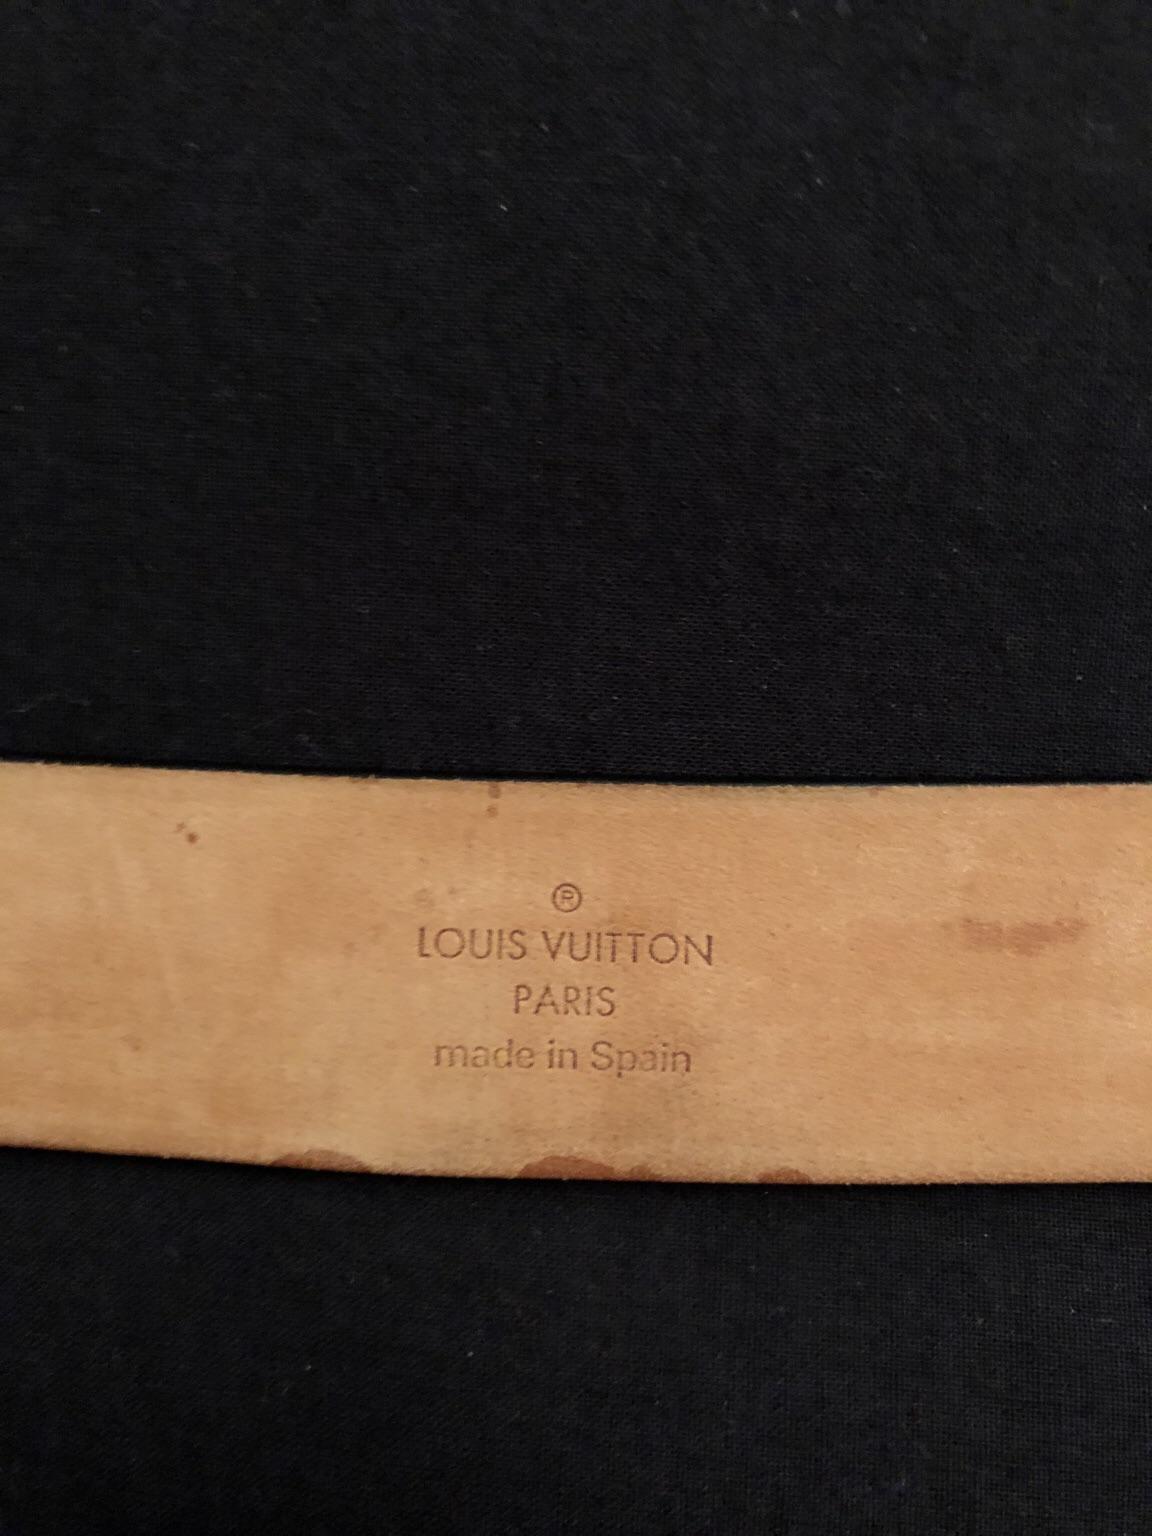 Cintura Louis Vuitton Originale! in 20124 Milano for €100.00 for sale